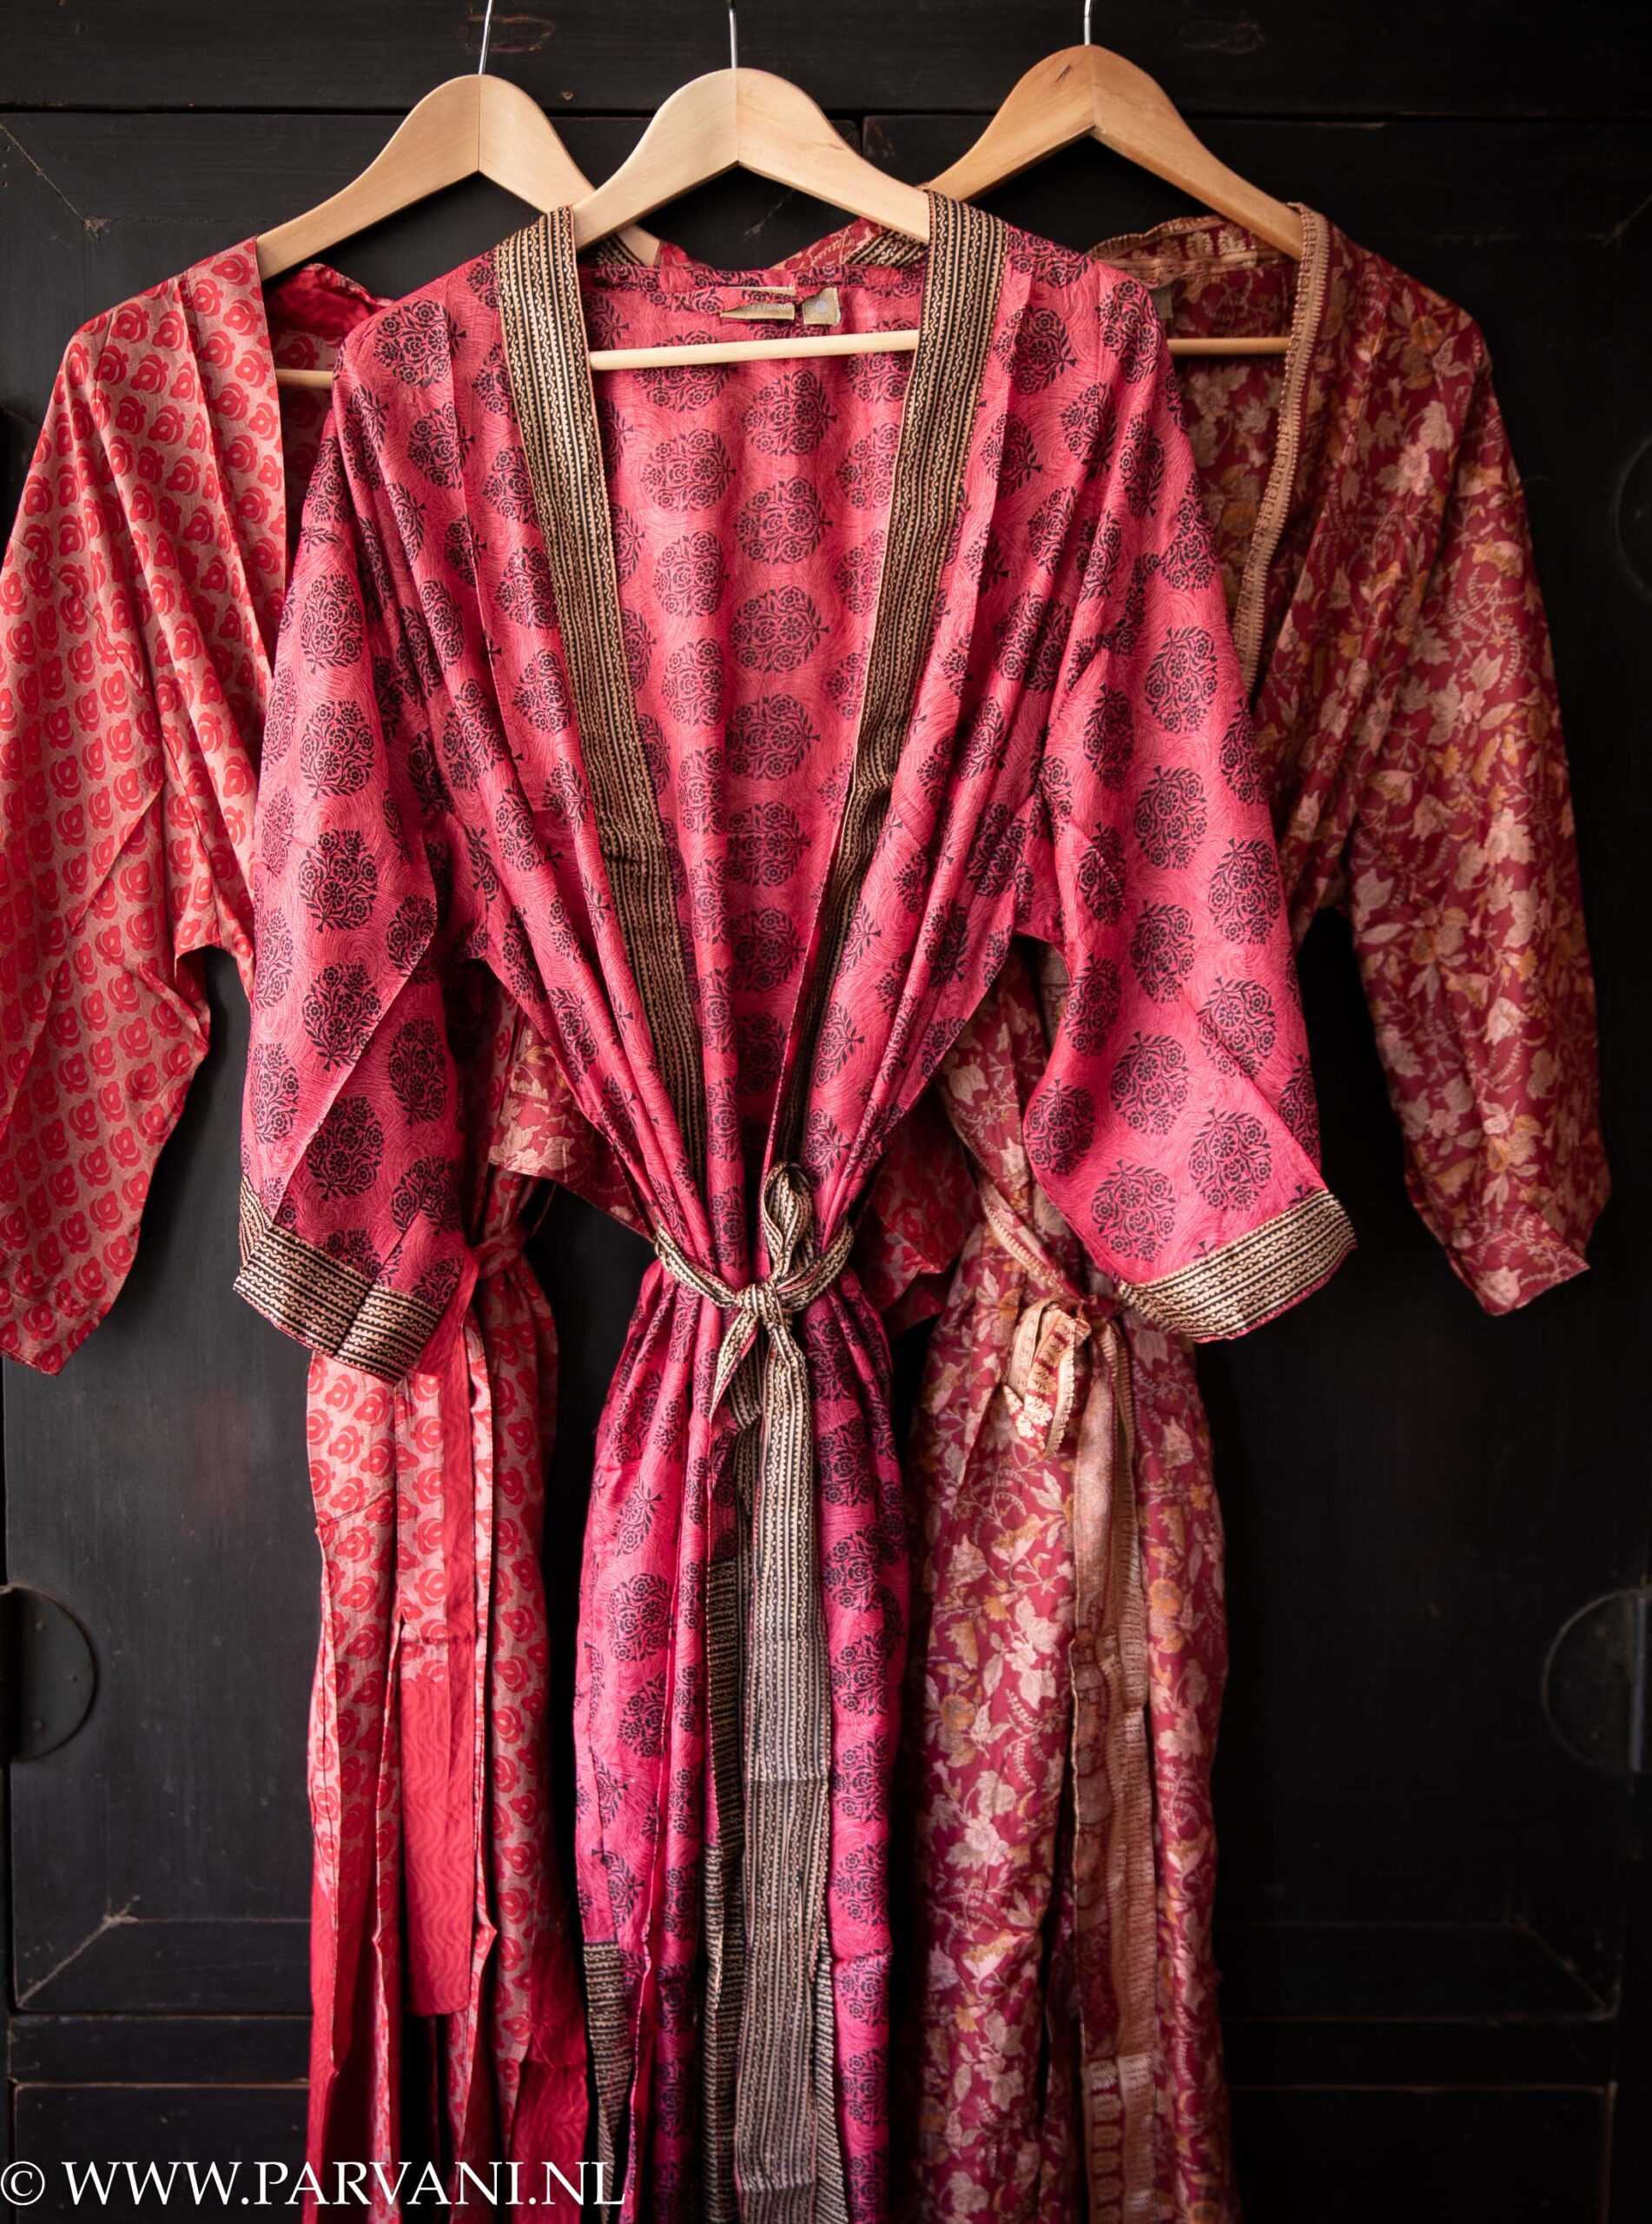 risico leerplan Concessie Zijde kimono's van Indiase saree sari stof in kleurrijke stof en patronen |  Parvani